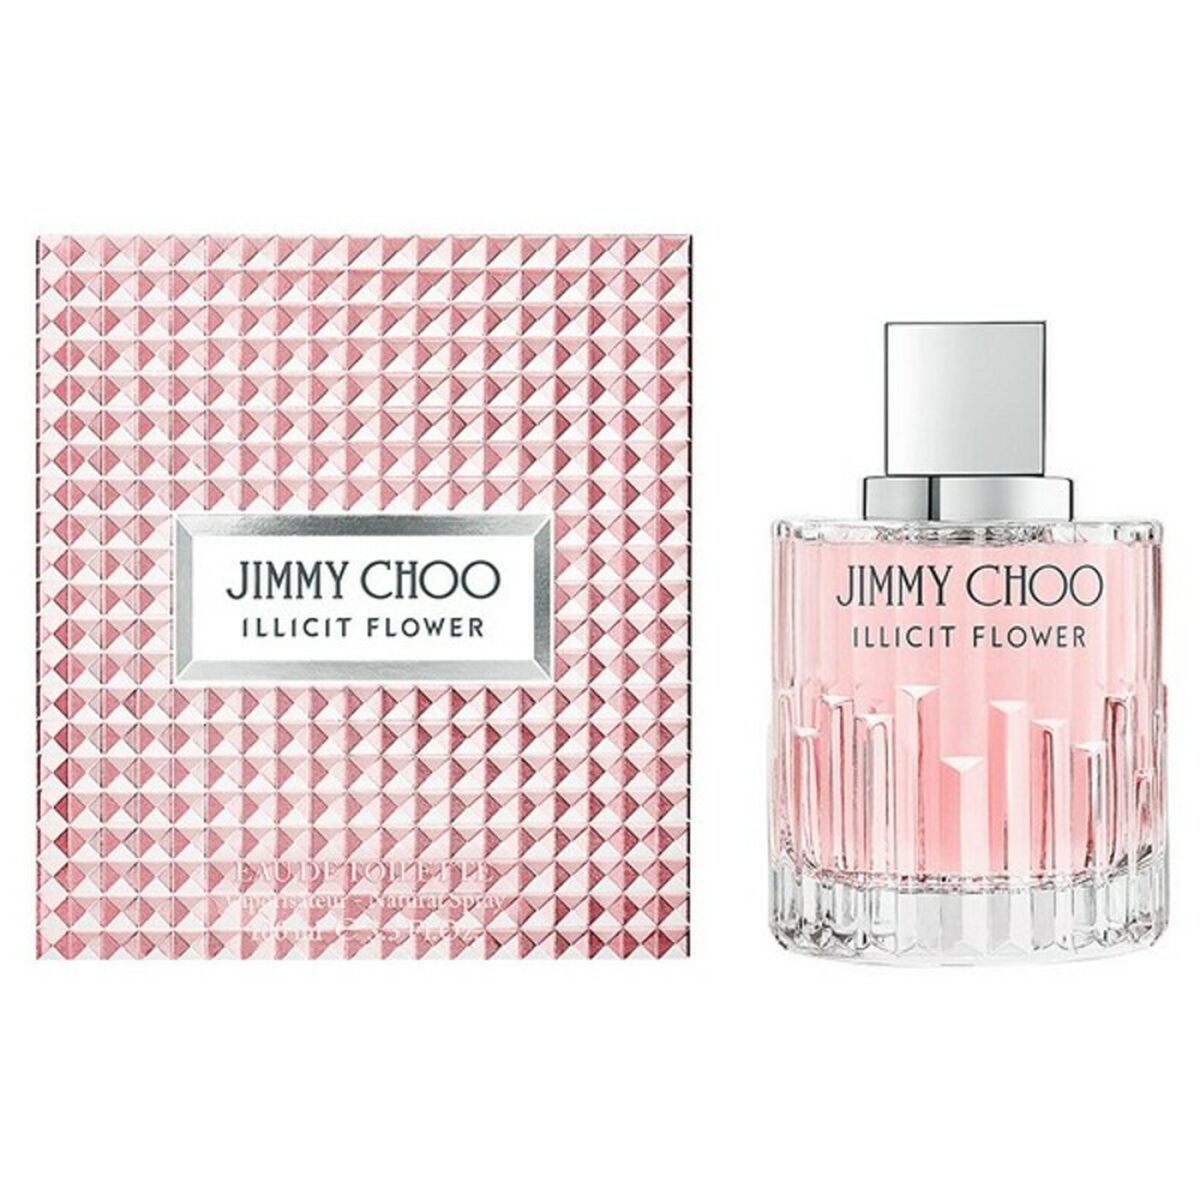 Women's Perfume Jimmy Choo EDT Illicit Flower (100 ml)-0